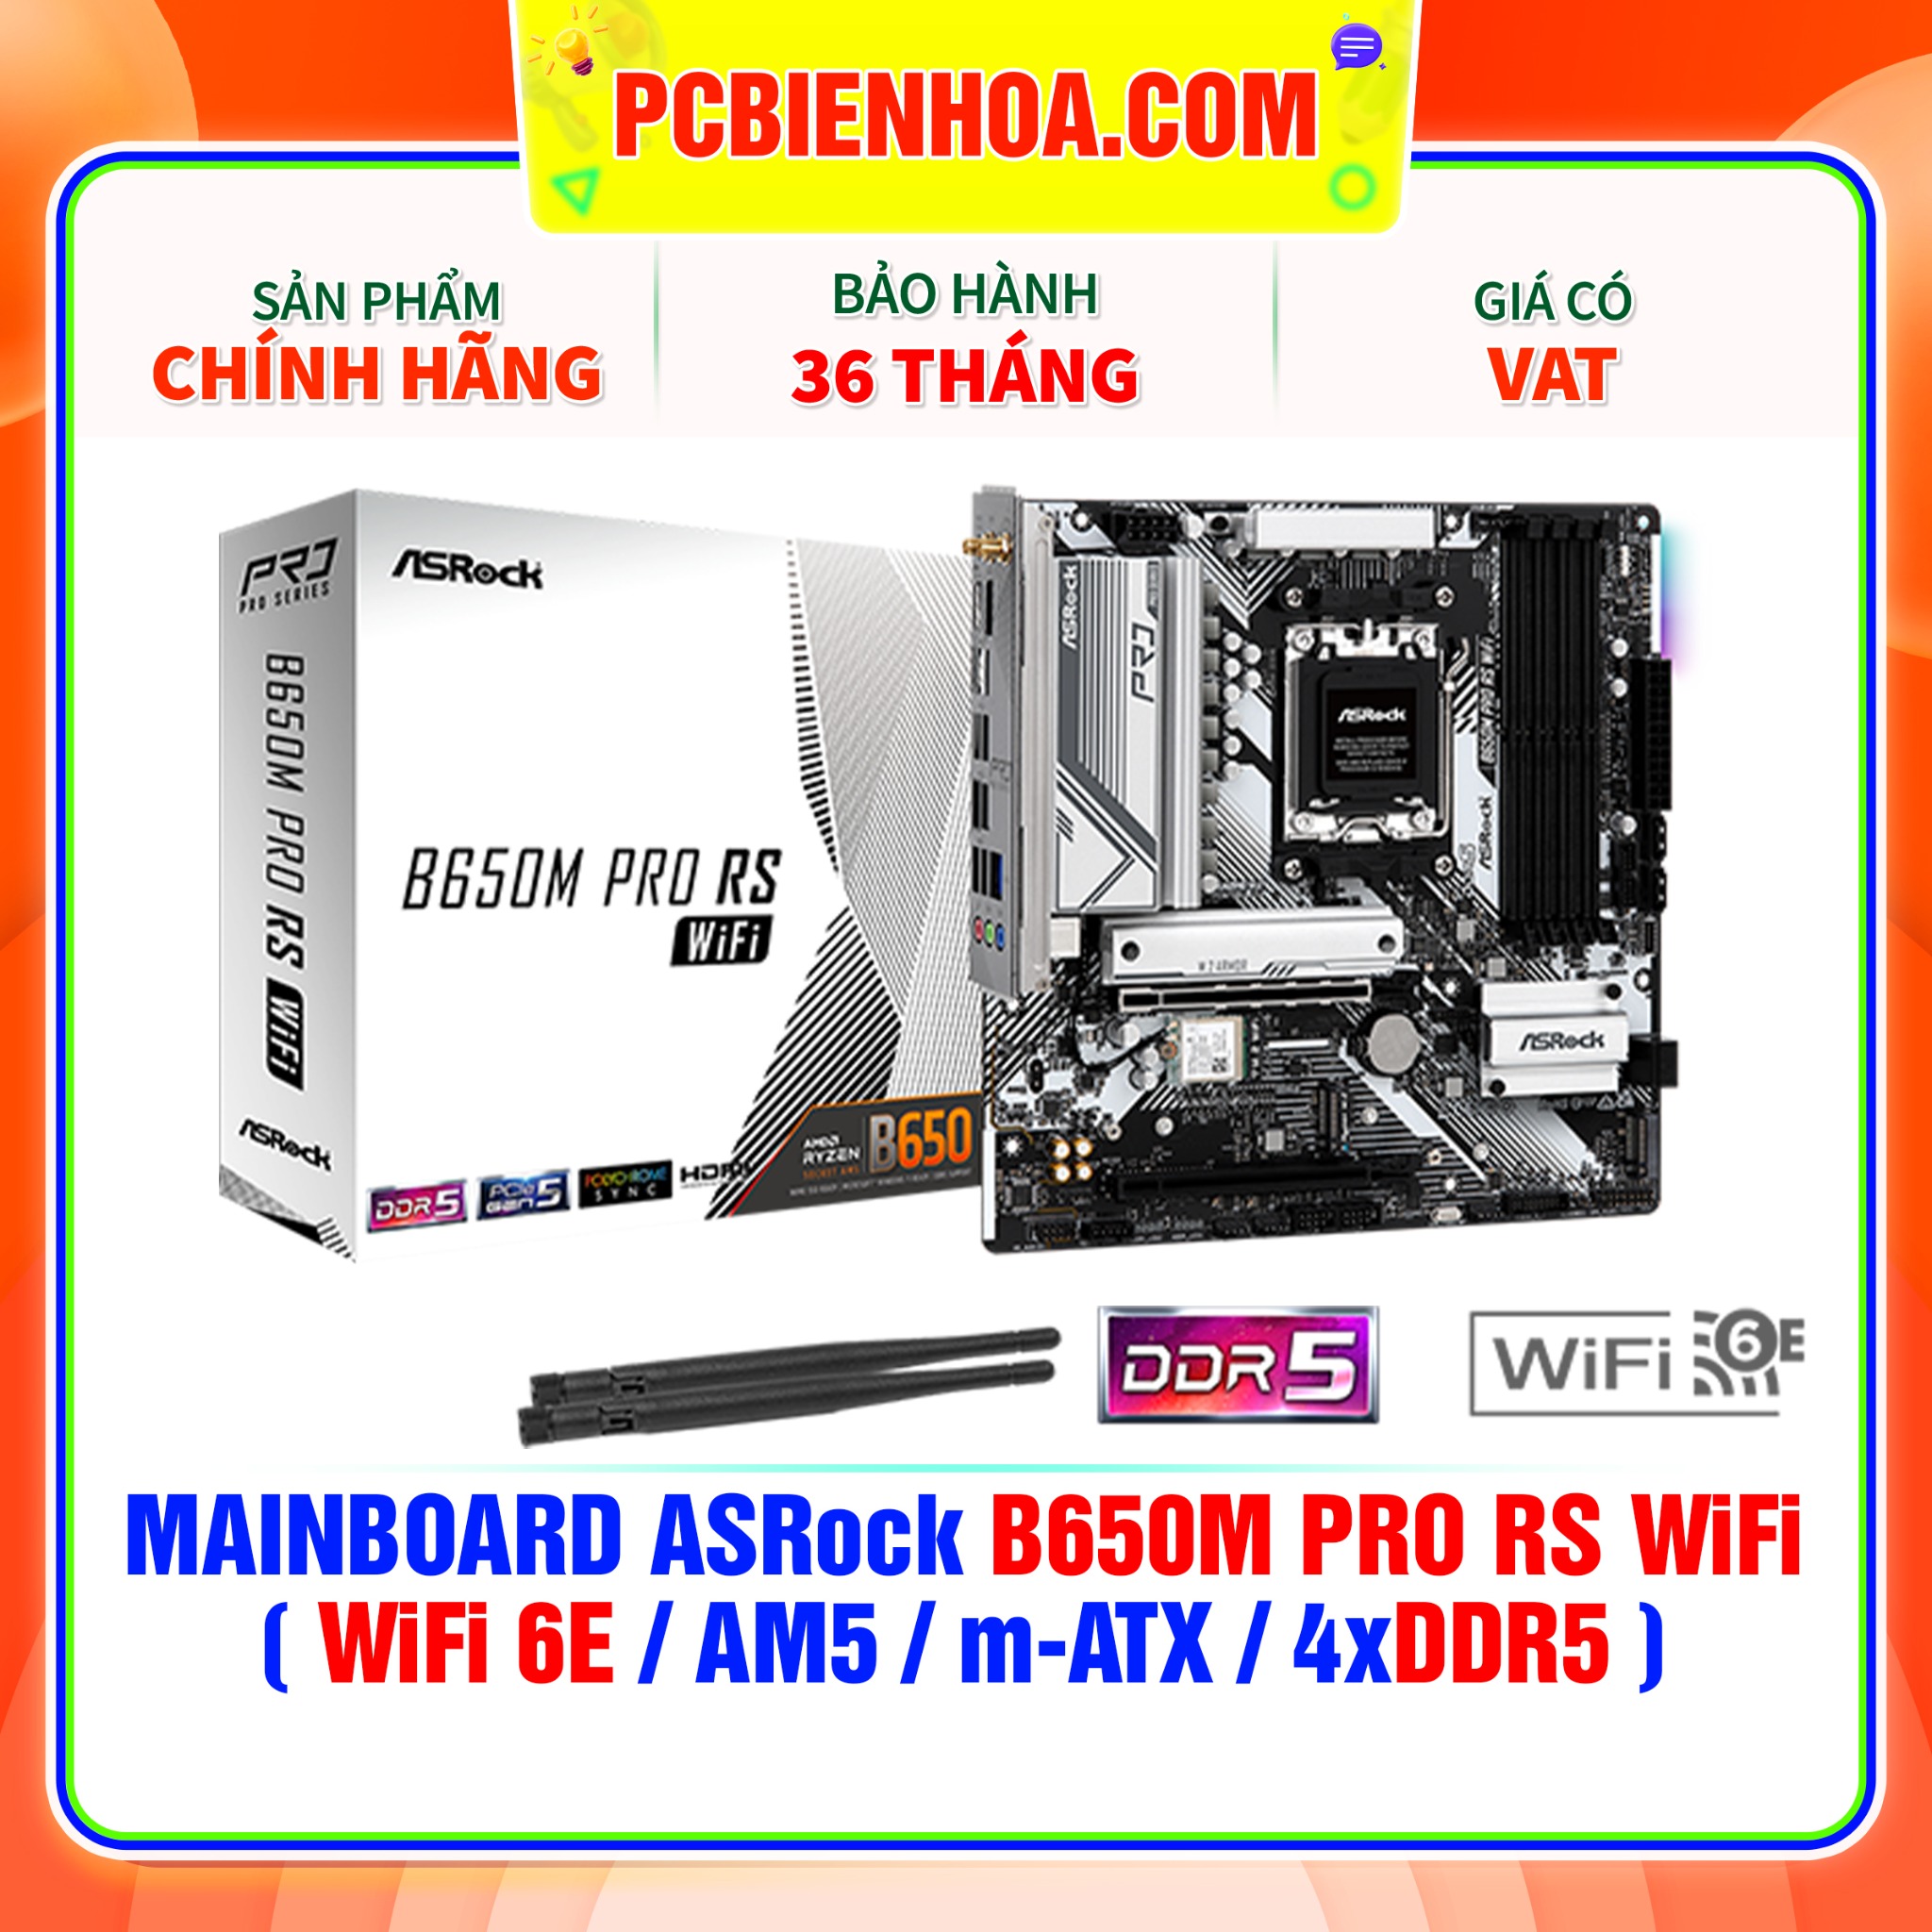 MAINBOARD ASRock B650M PRO RS WiFi  WiFi 6E AM5 m-ATX 4xDDR5